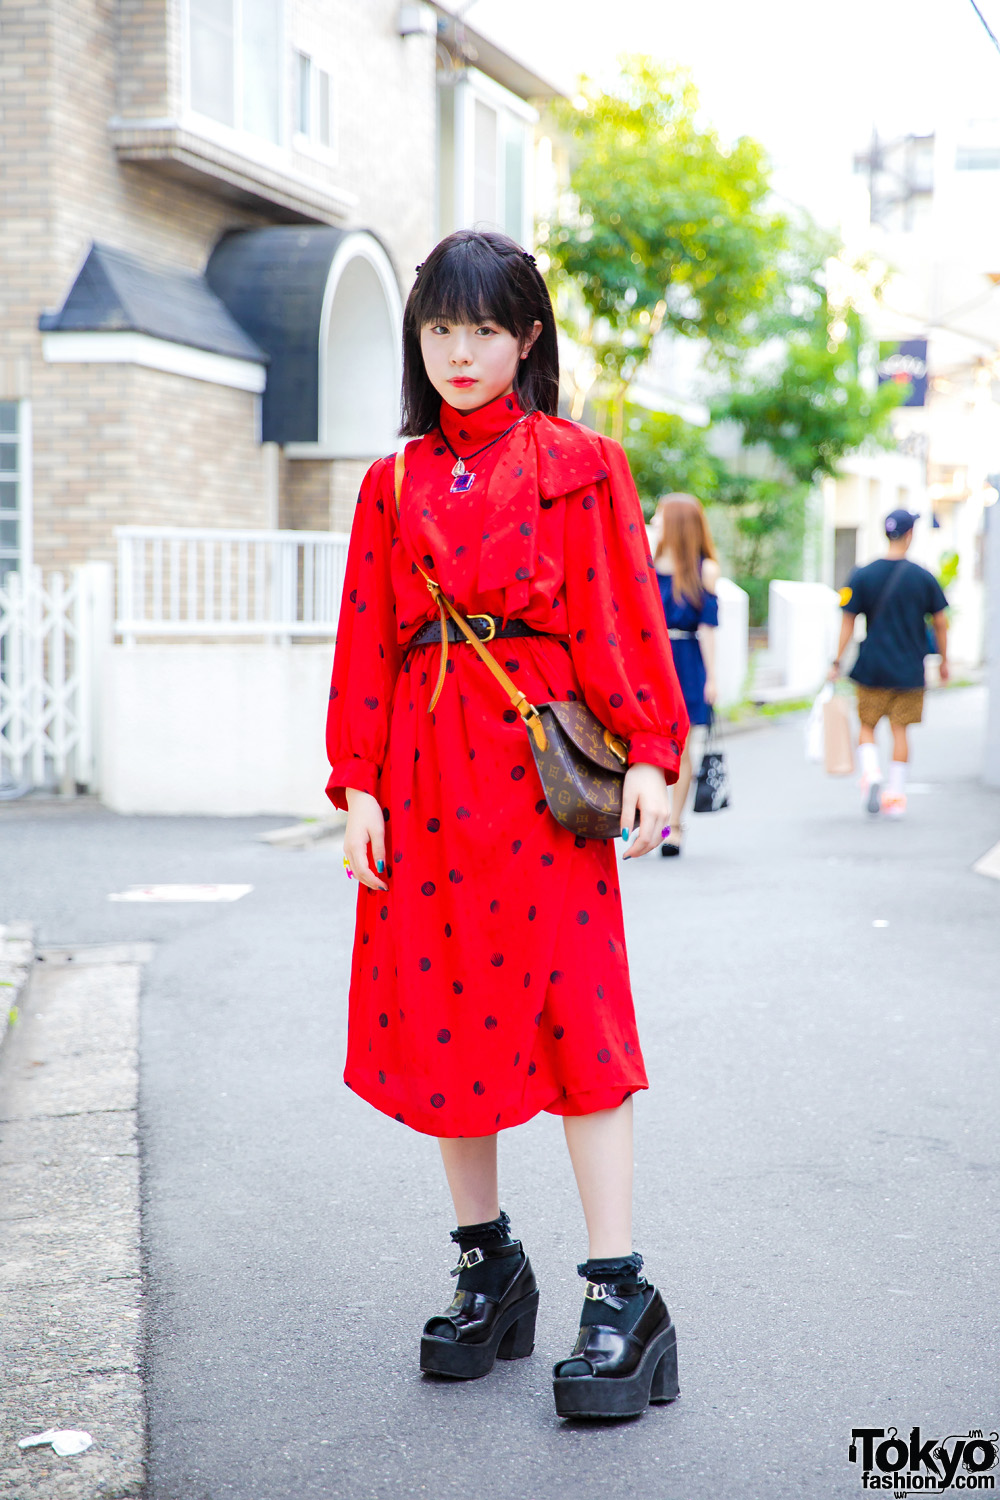 Harajuku Vintage Street Style w/ Polka-Dot Dress, Oh Pearl, Kinji, Louis Vuitton Bag, Bubbles ...